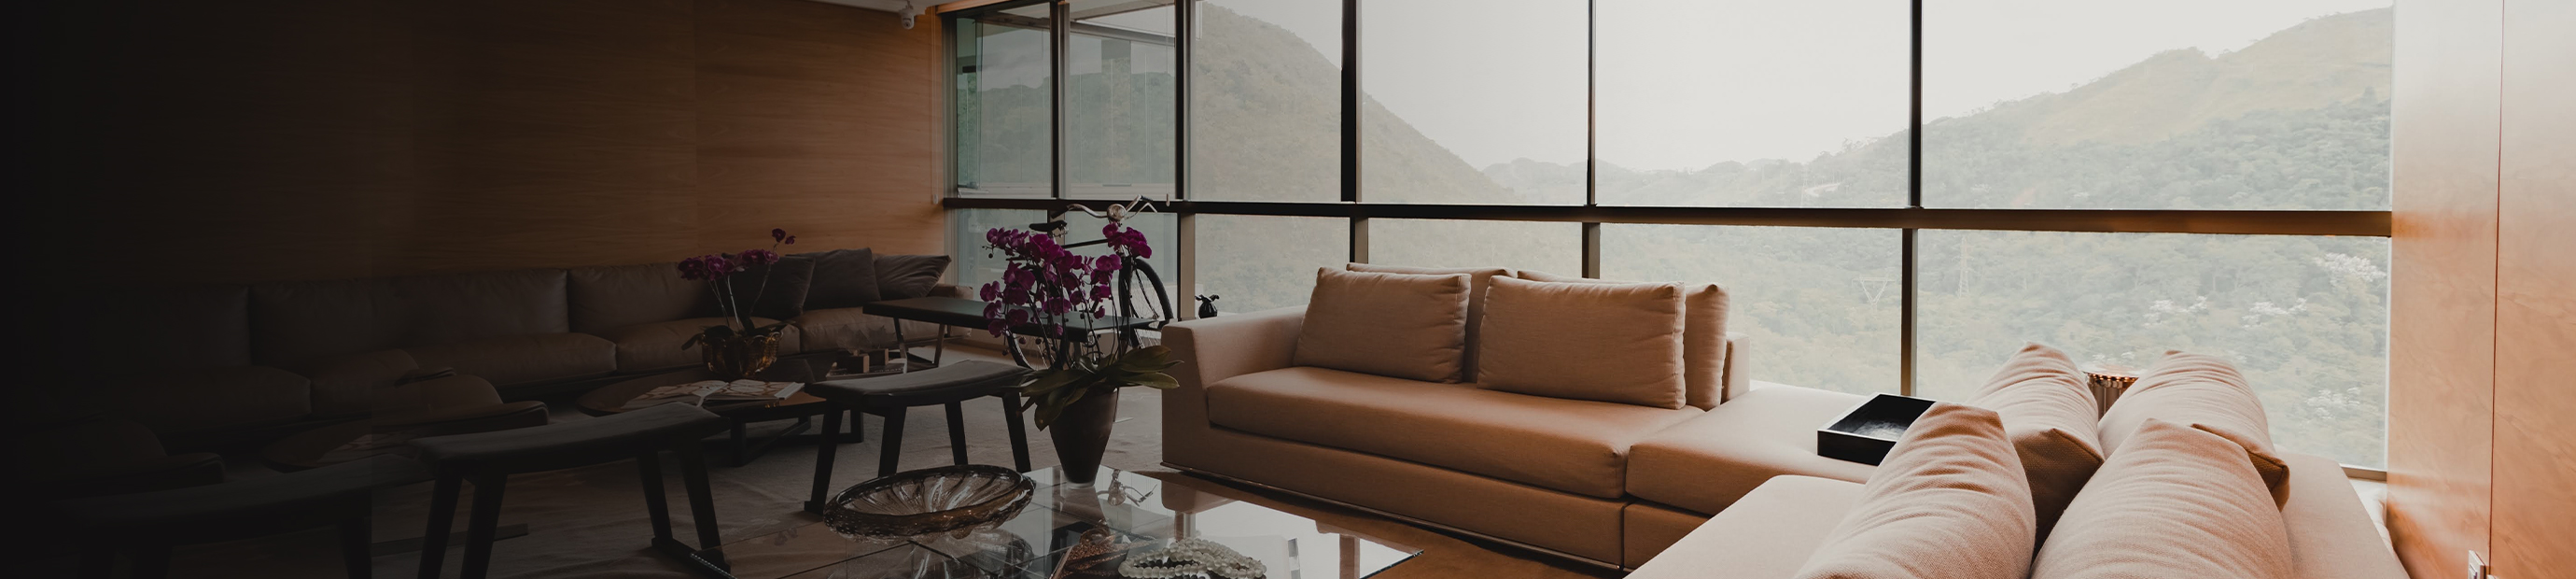 Smart home technology controlled living room_Evvr Center
